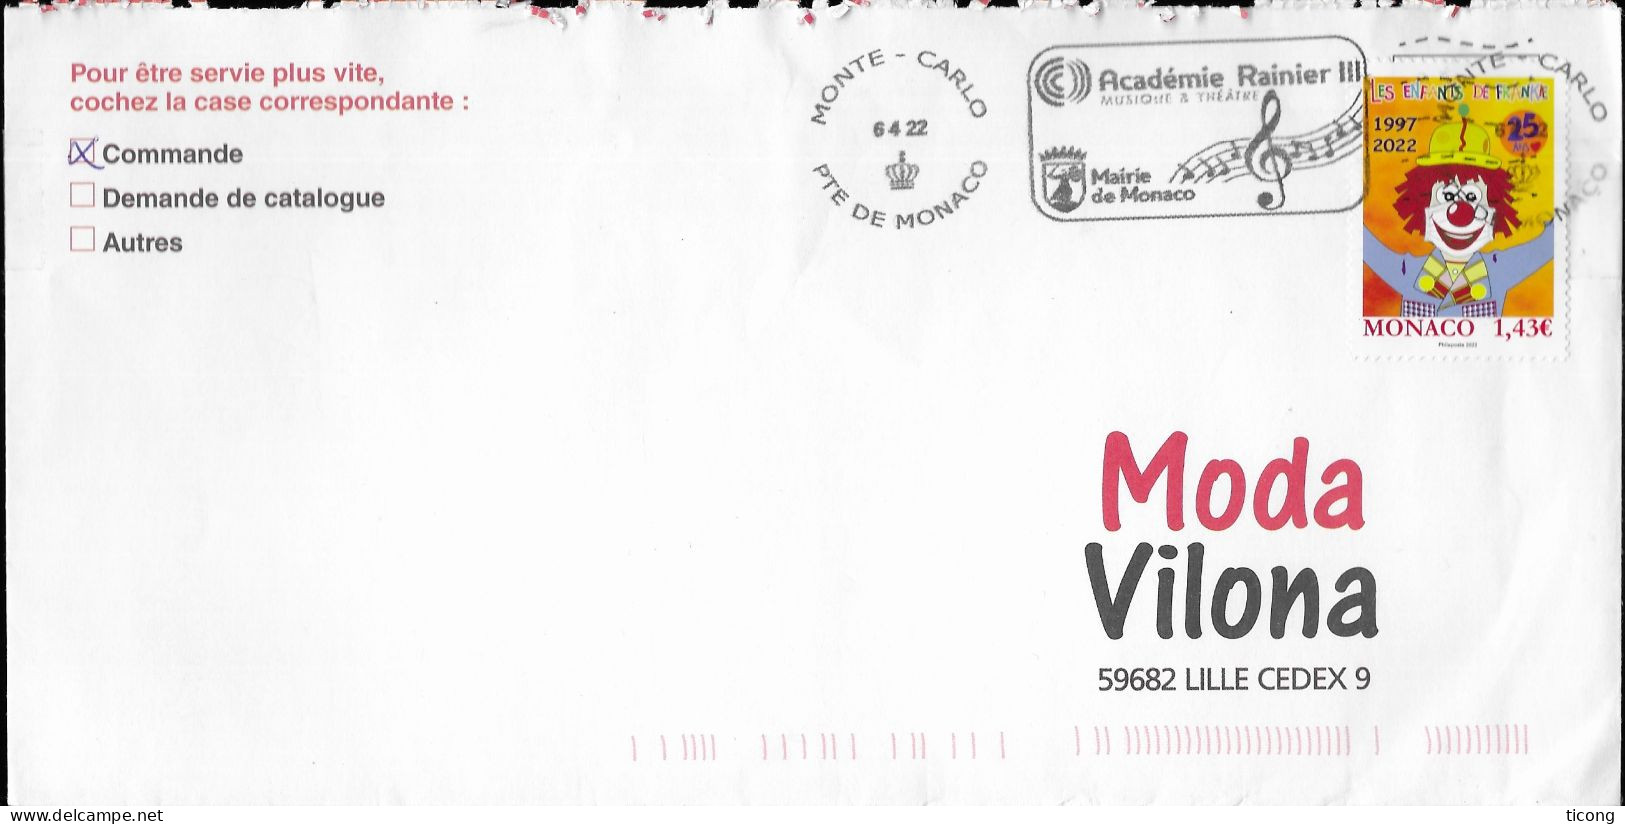 MONACO MONTE CARLO FLAMME ACADEMIE RAINIER III MUSIQUE, THEATRE 2022, TIMBRE ENFANTS DE FRANCE 2022, UN CLOWN ( CIRQUE ) - Covers & Documents